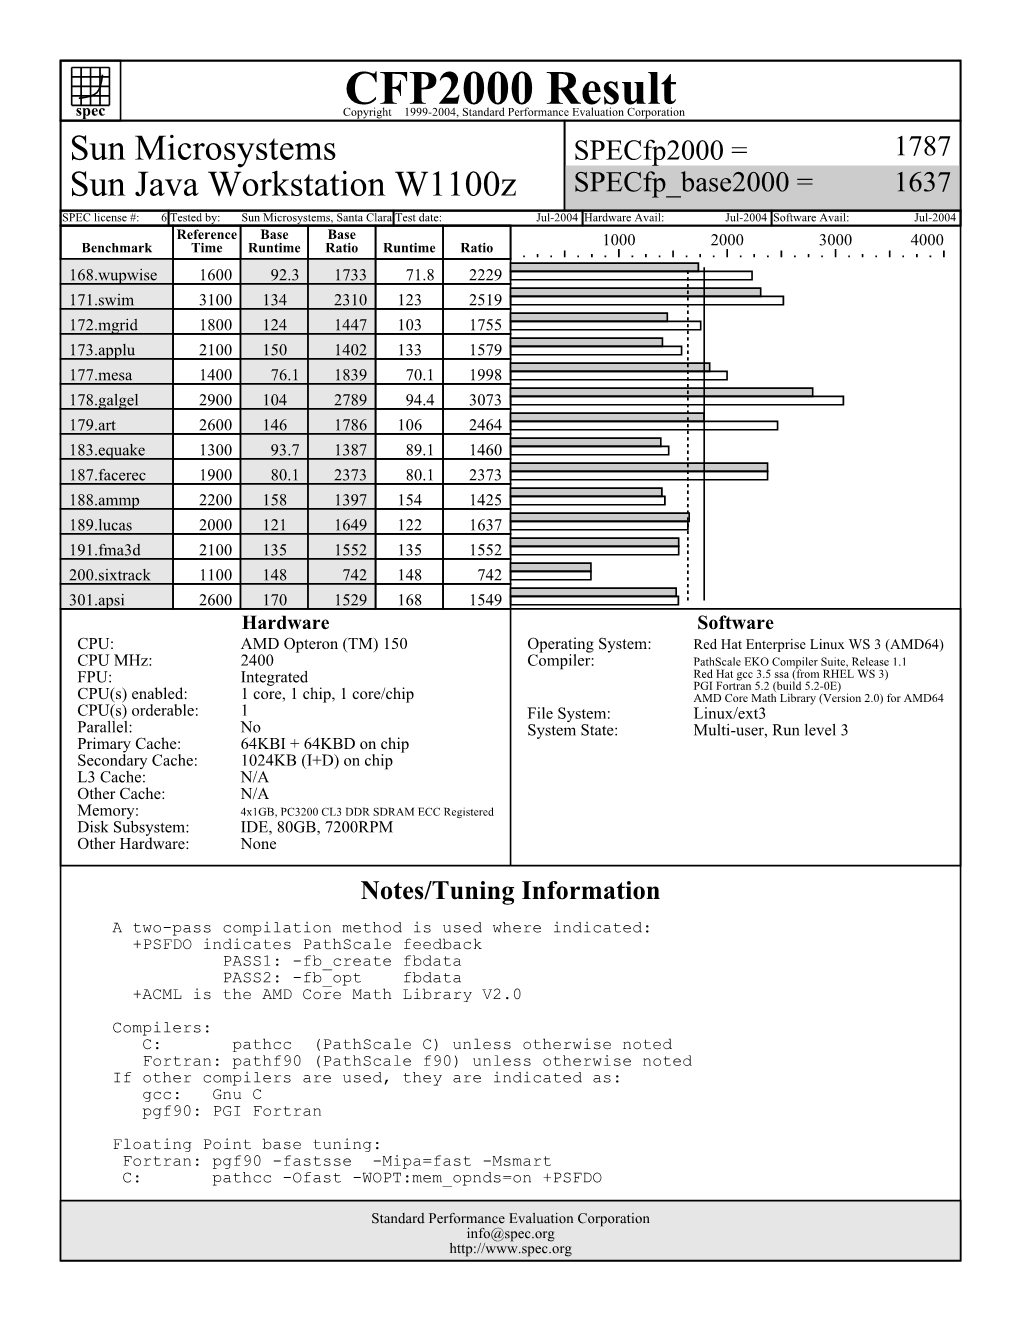 Sun Microsystems: Sun Java Workstation W1100z